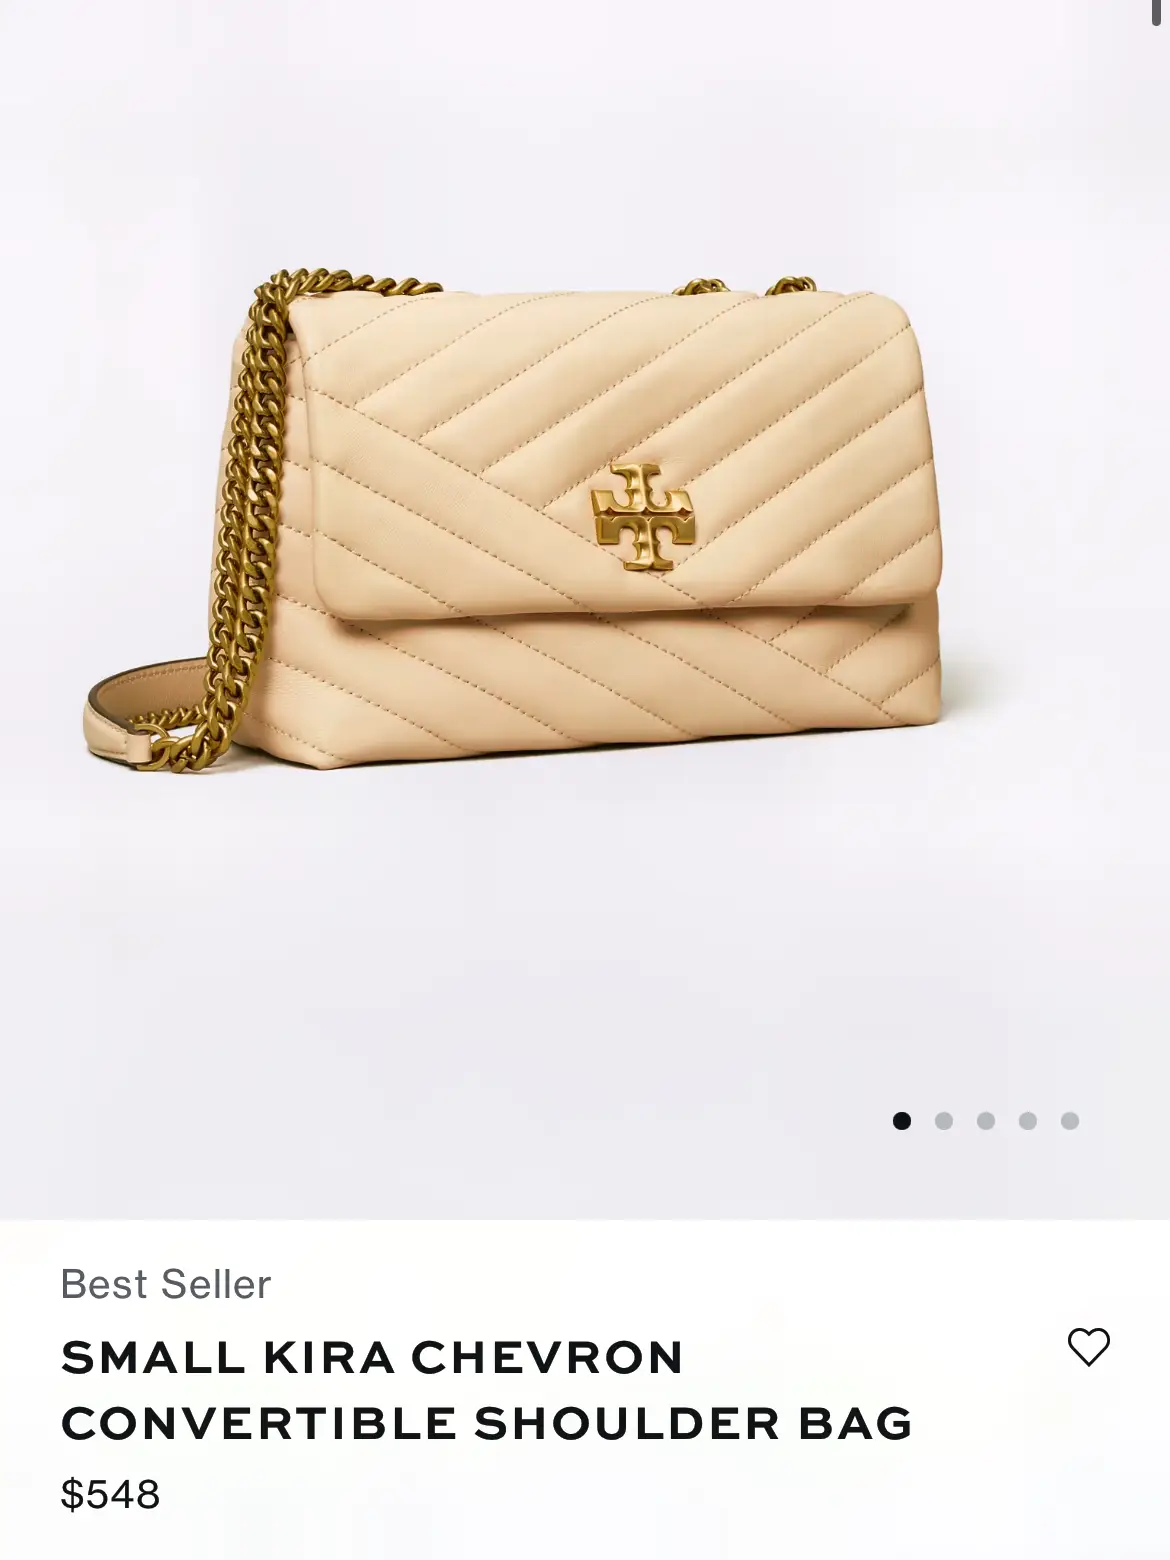 NEW Tory Burch Black SMALL Kira Chevron Convertible Shoulder Bag $548